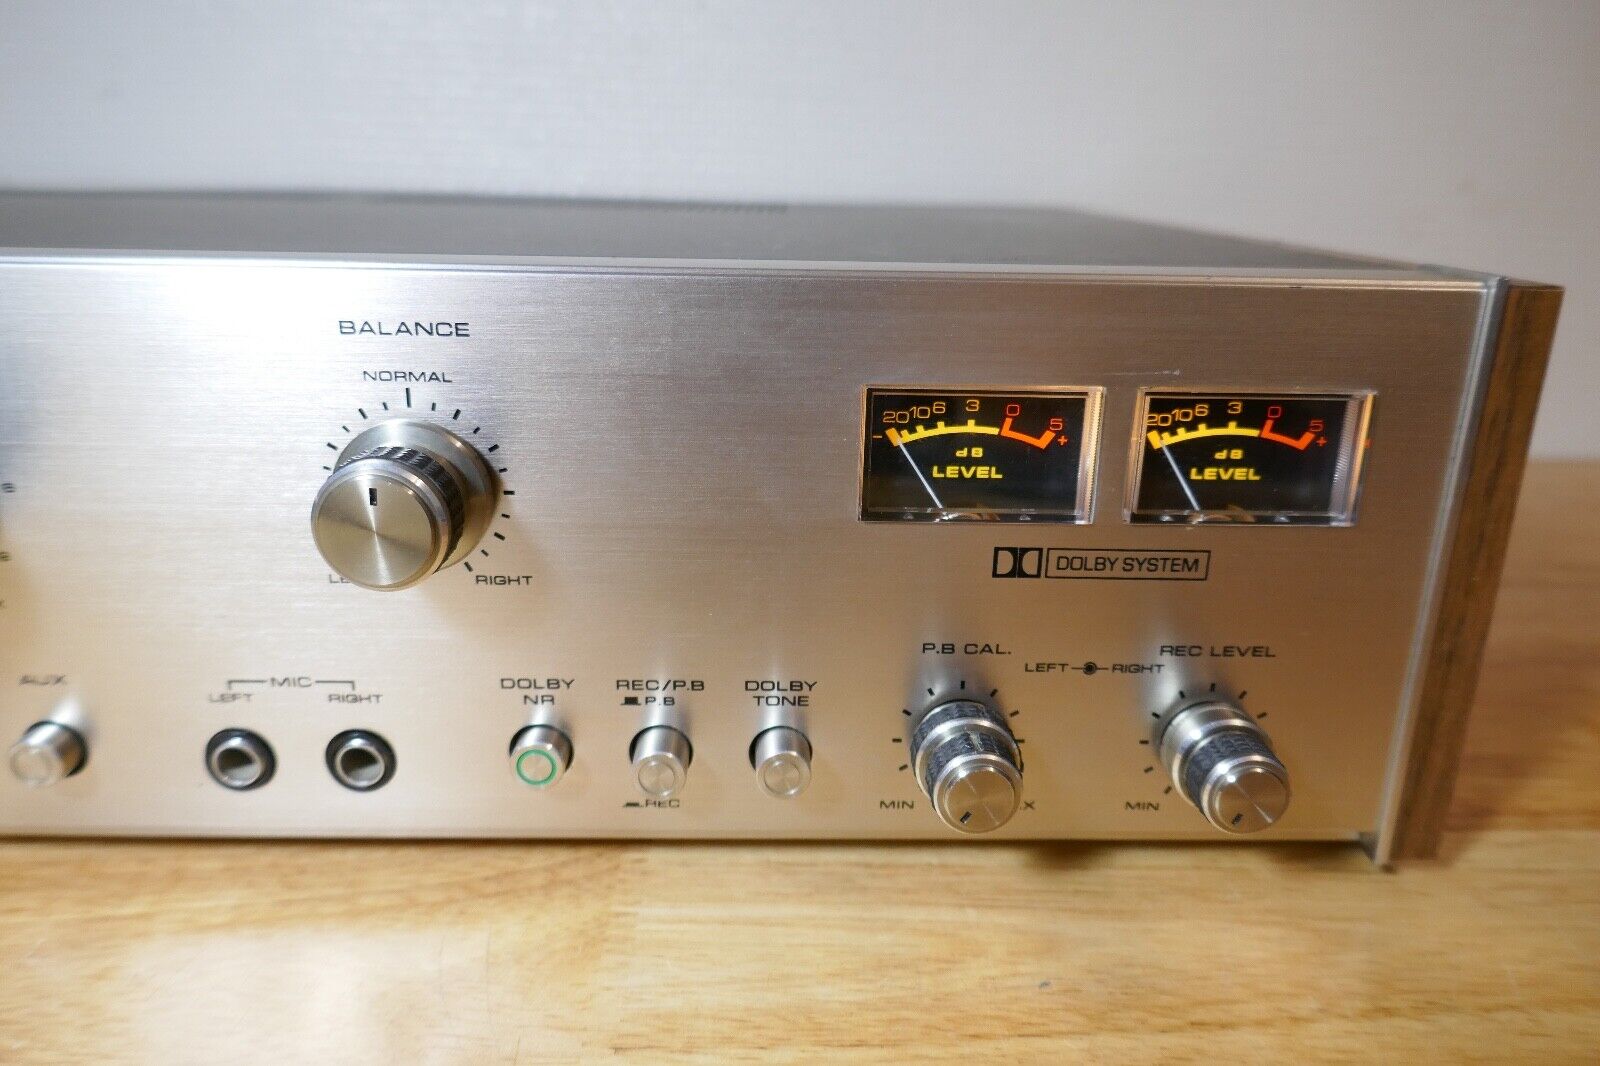 amplificateur amplifier Akai AA-5210 DB vintage occasion